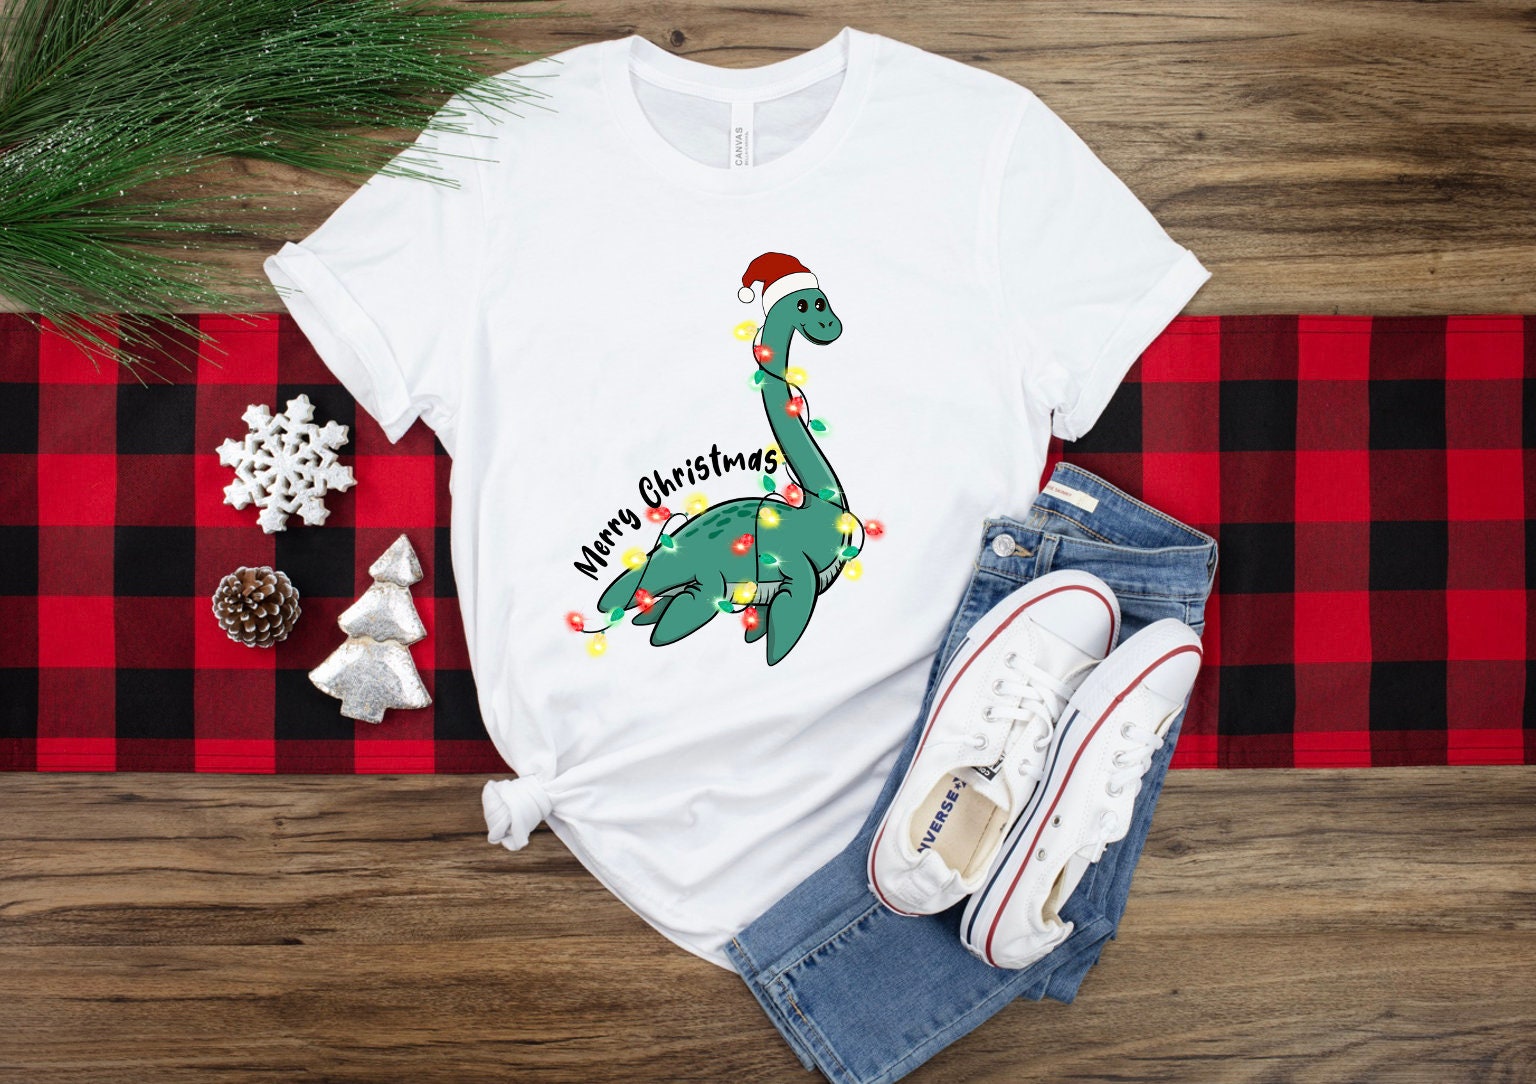 Discover Merry Christmas Dinosaur Shirt, Dino Lover Shirt, Xmas Kids Shirt, Cute Dinosaur Shirt, Christmas Toddler Tee, Boys Holiday Shirt